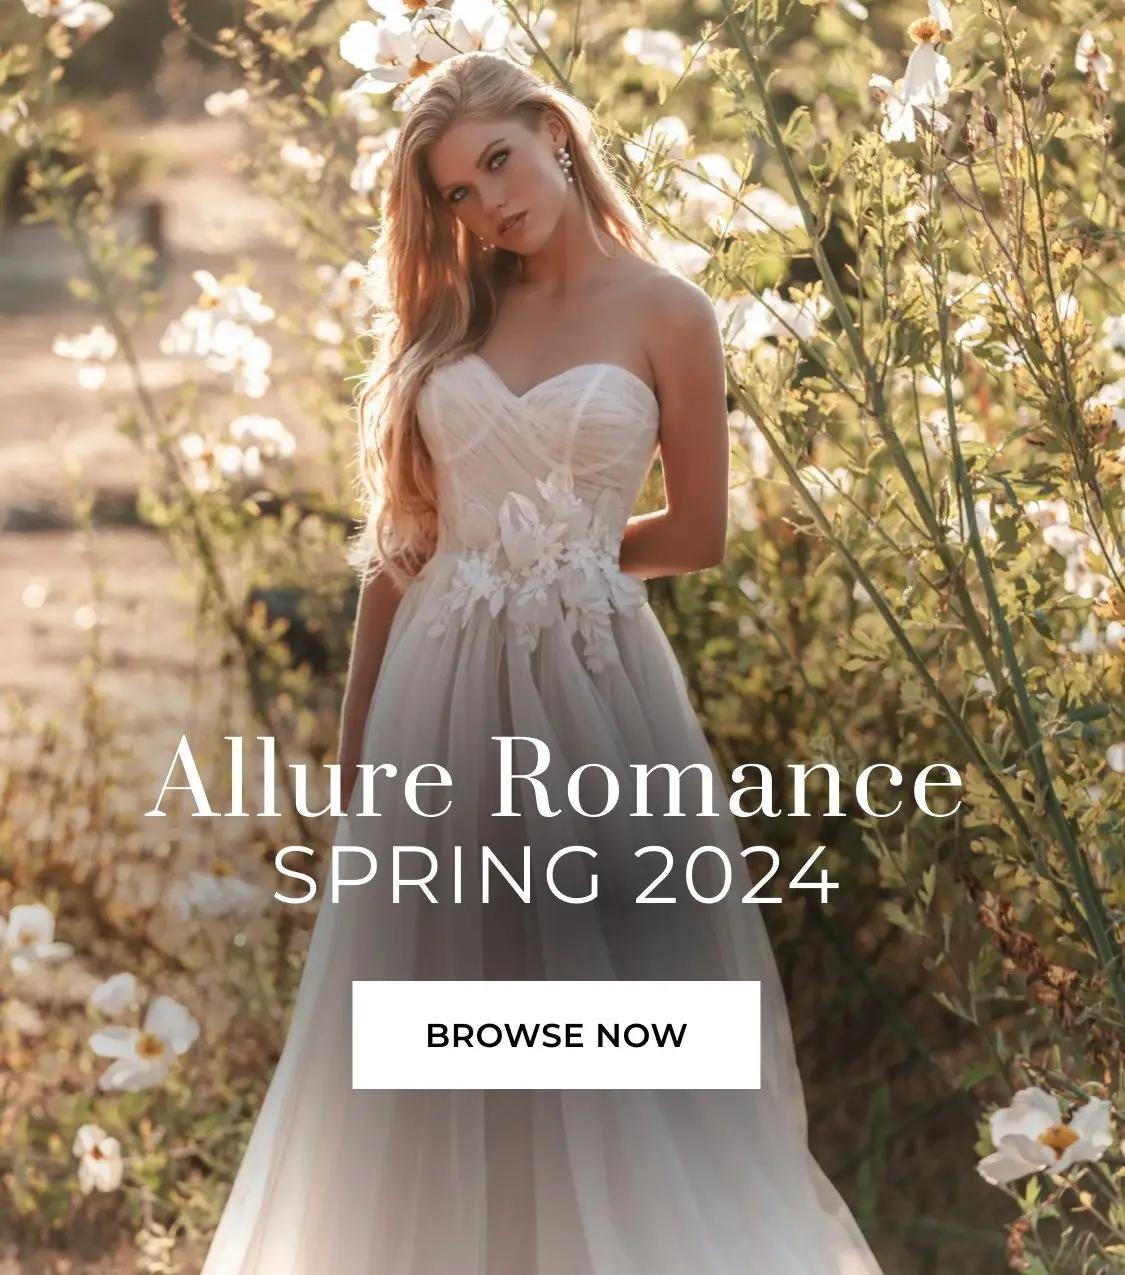 Allure Romance Spring 2024 banner mobile